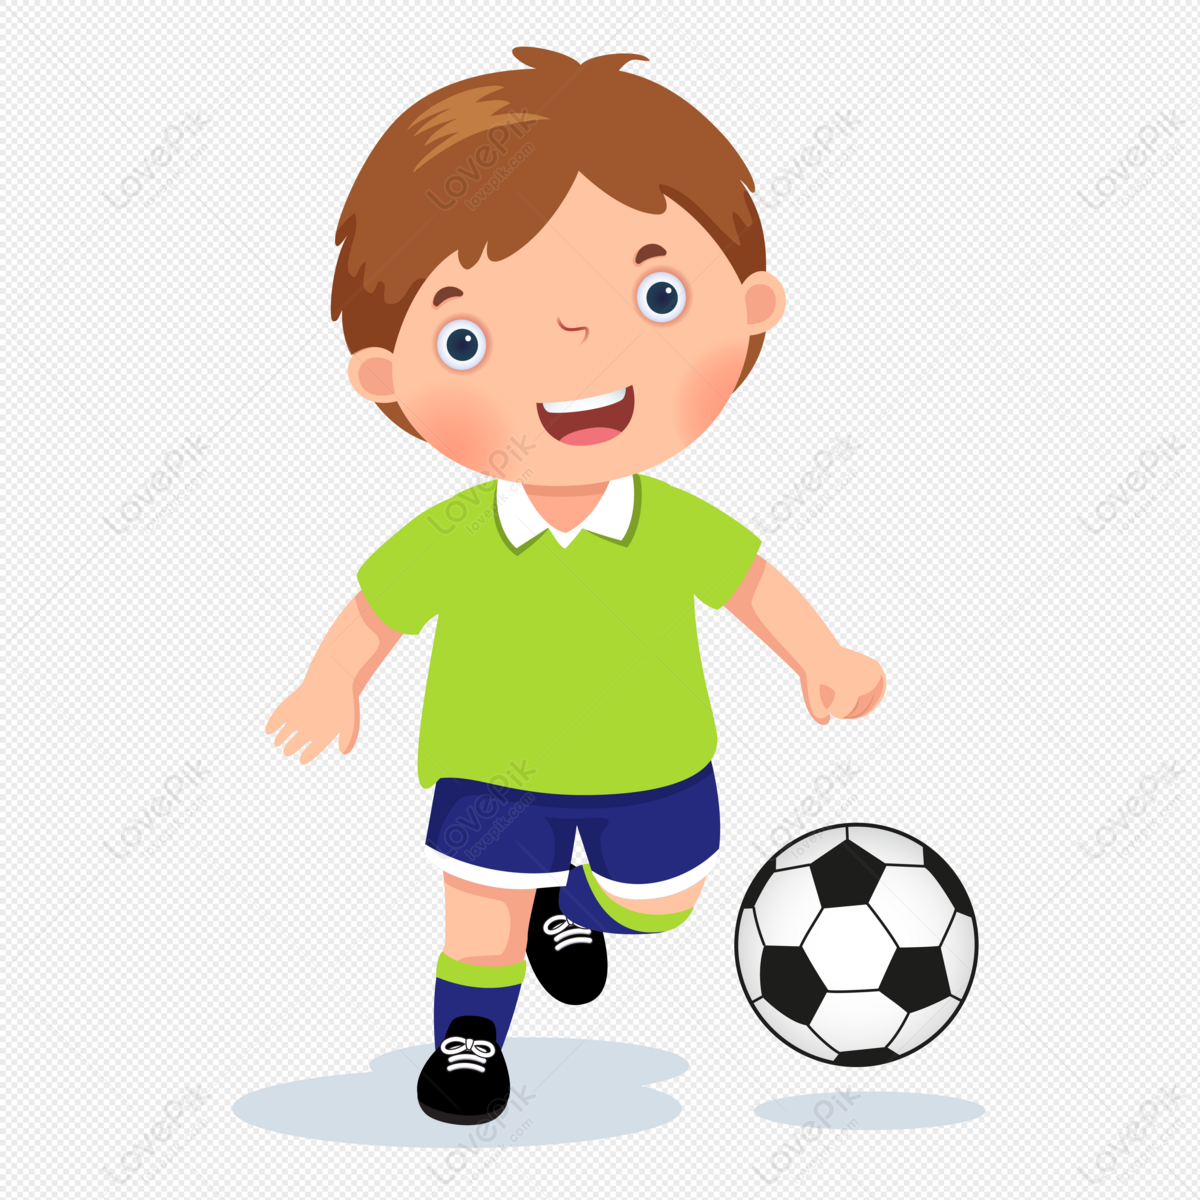 Jugar futbol infantil, futbol, juego, niños, niñito png